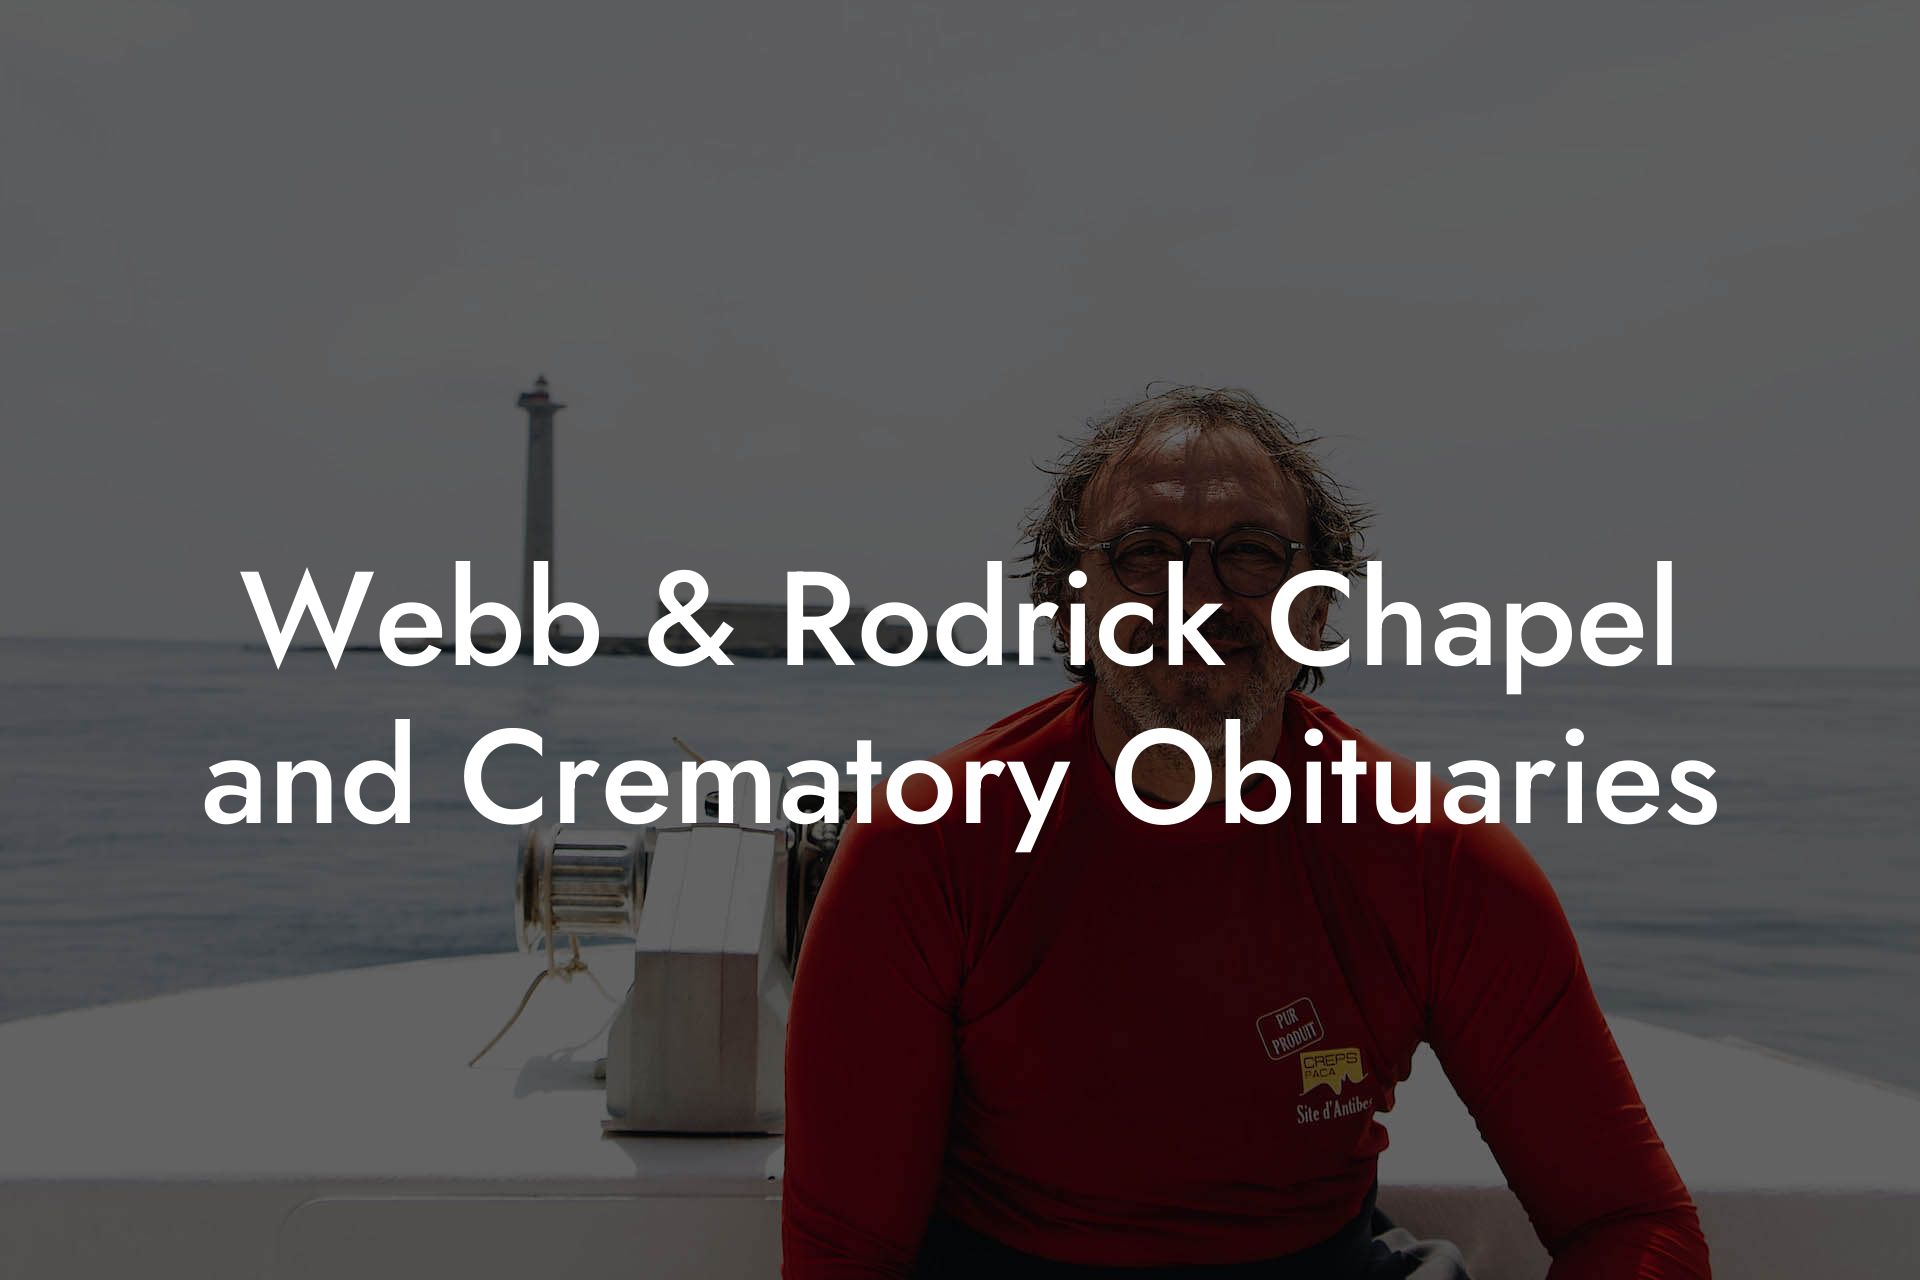 Webb & Rodrick Chapel and Crematory Obituaries